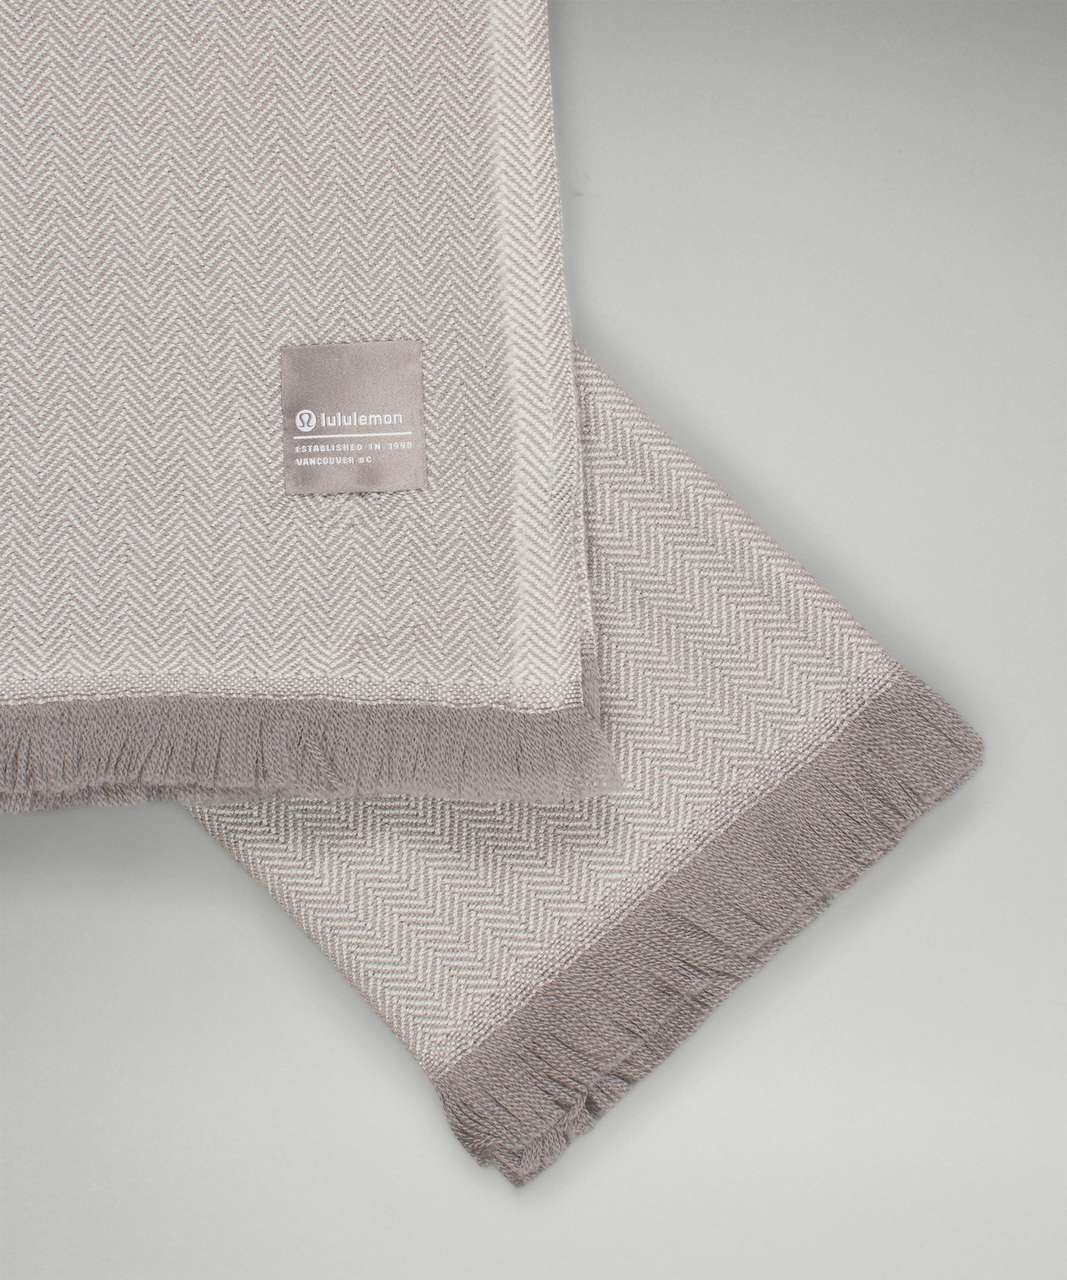 Lululemon Wool Blanket Scarf - Gull Grey / White Opal